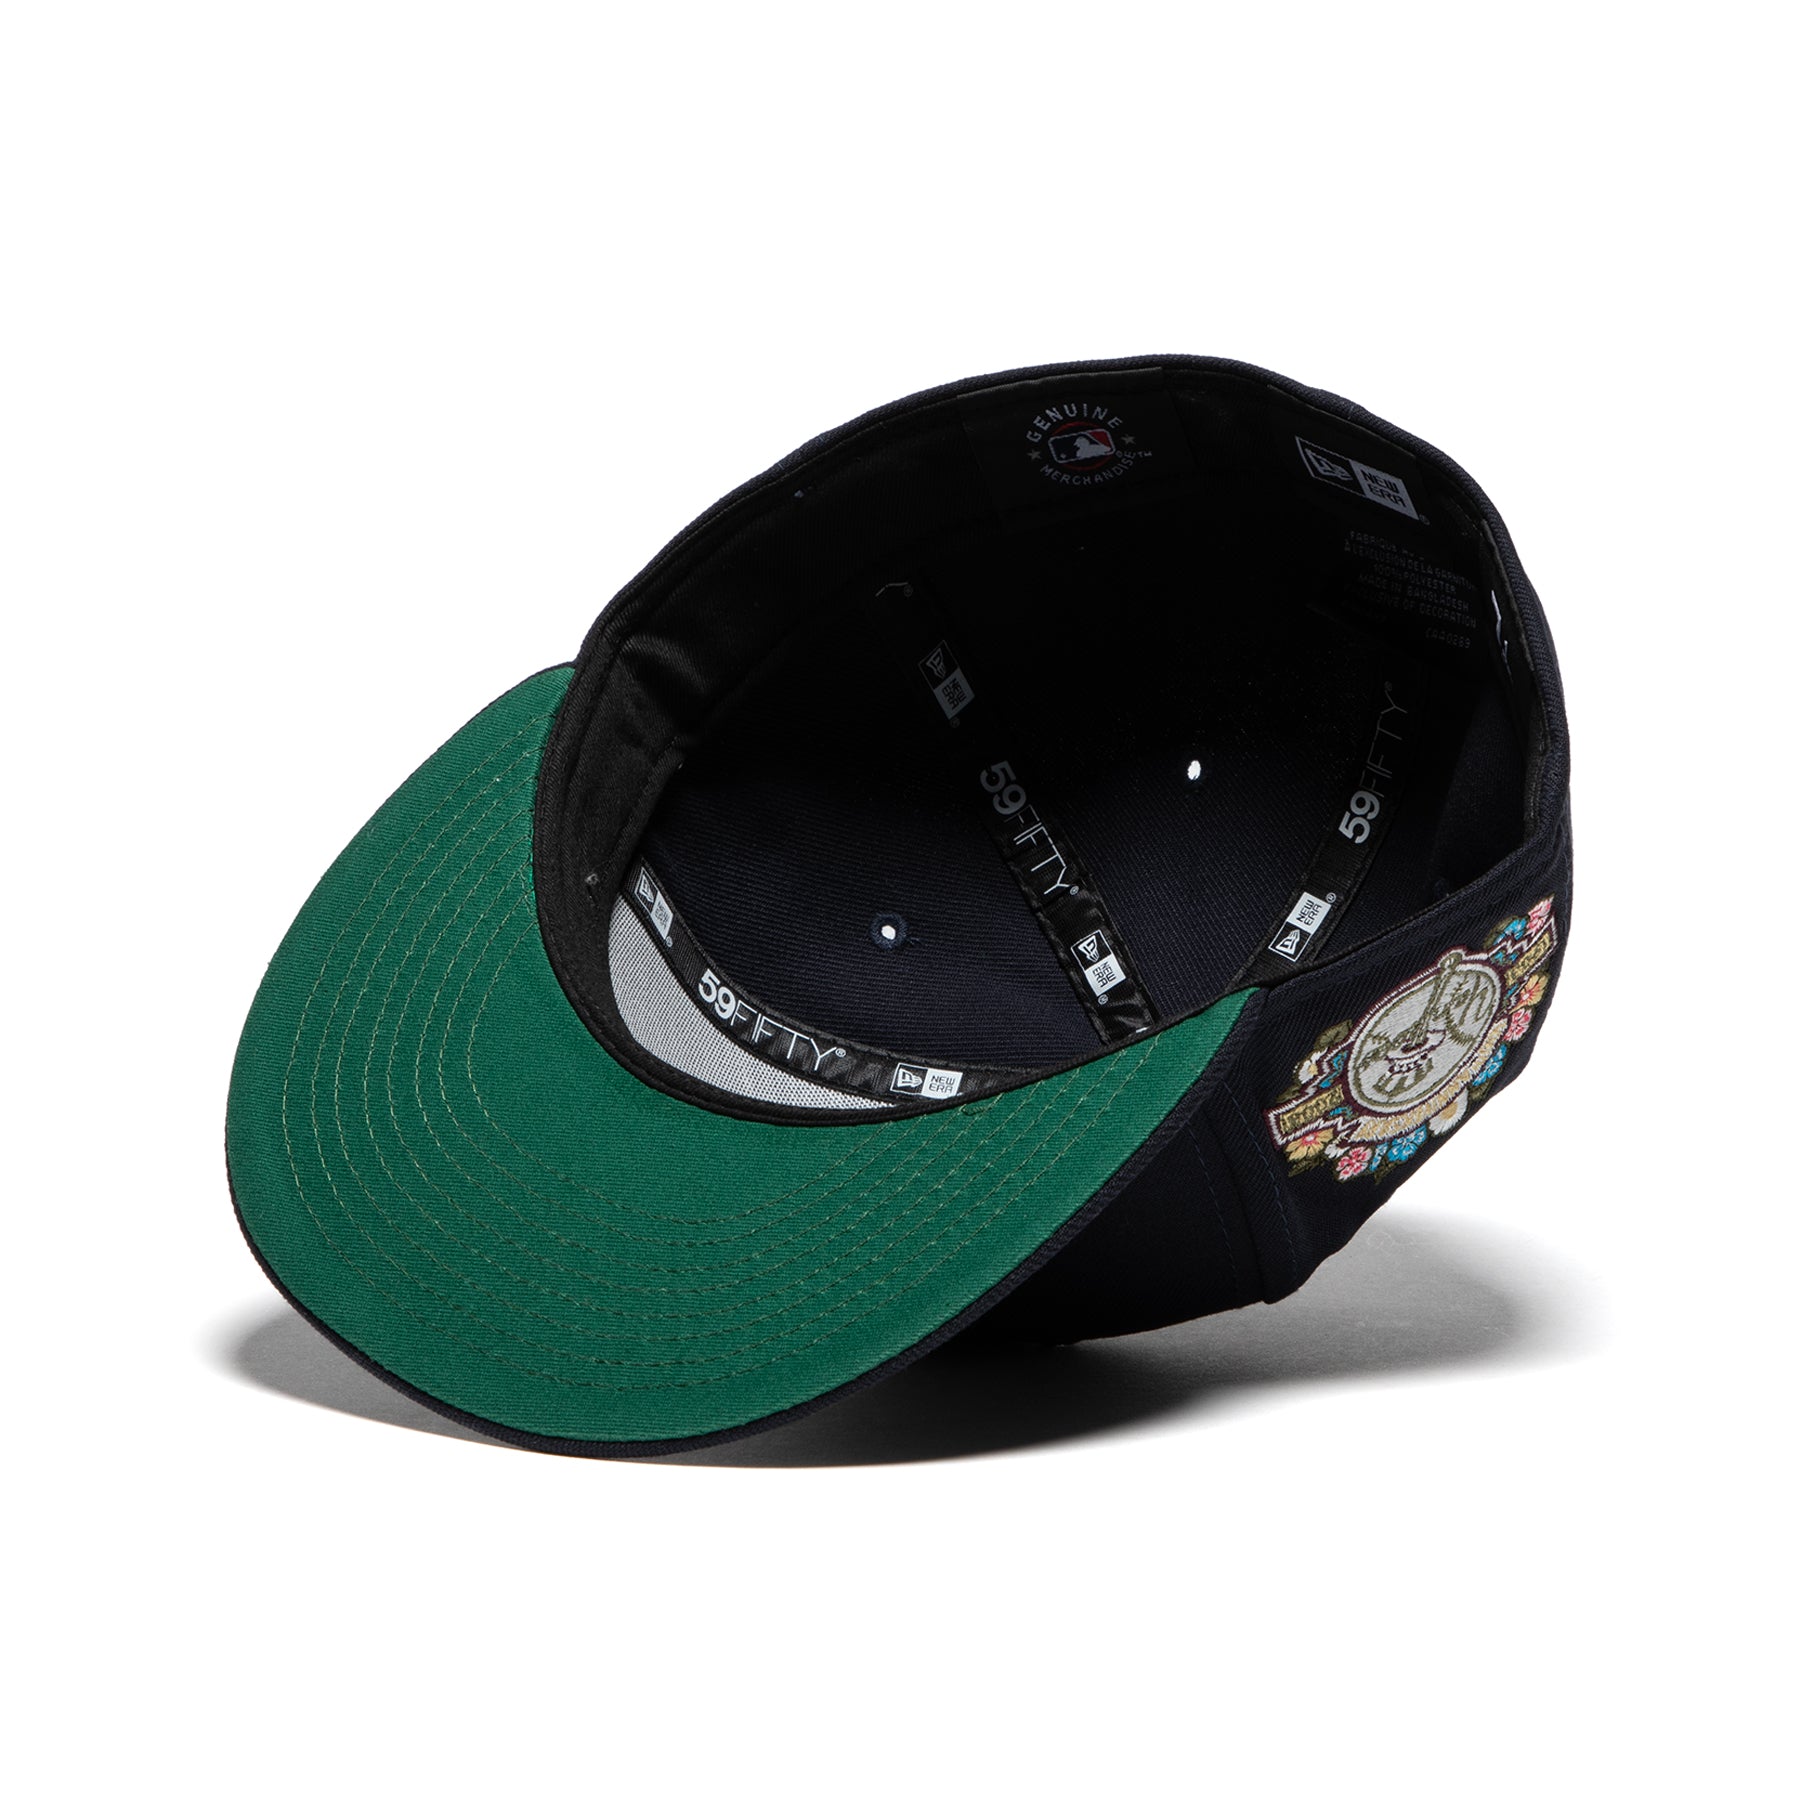 Saint Laurent x New Era Cotton Logo Cap - Black Hats, Accessories